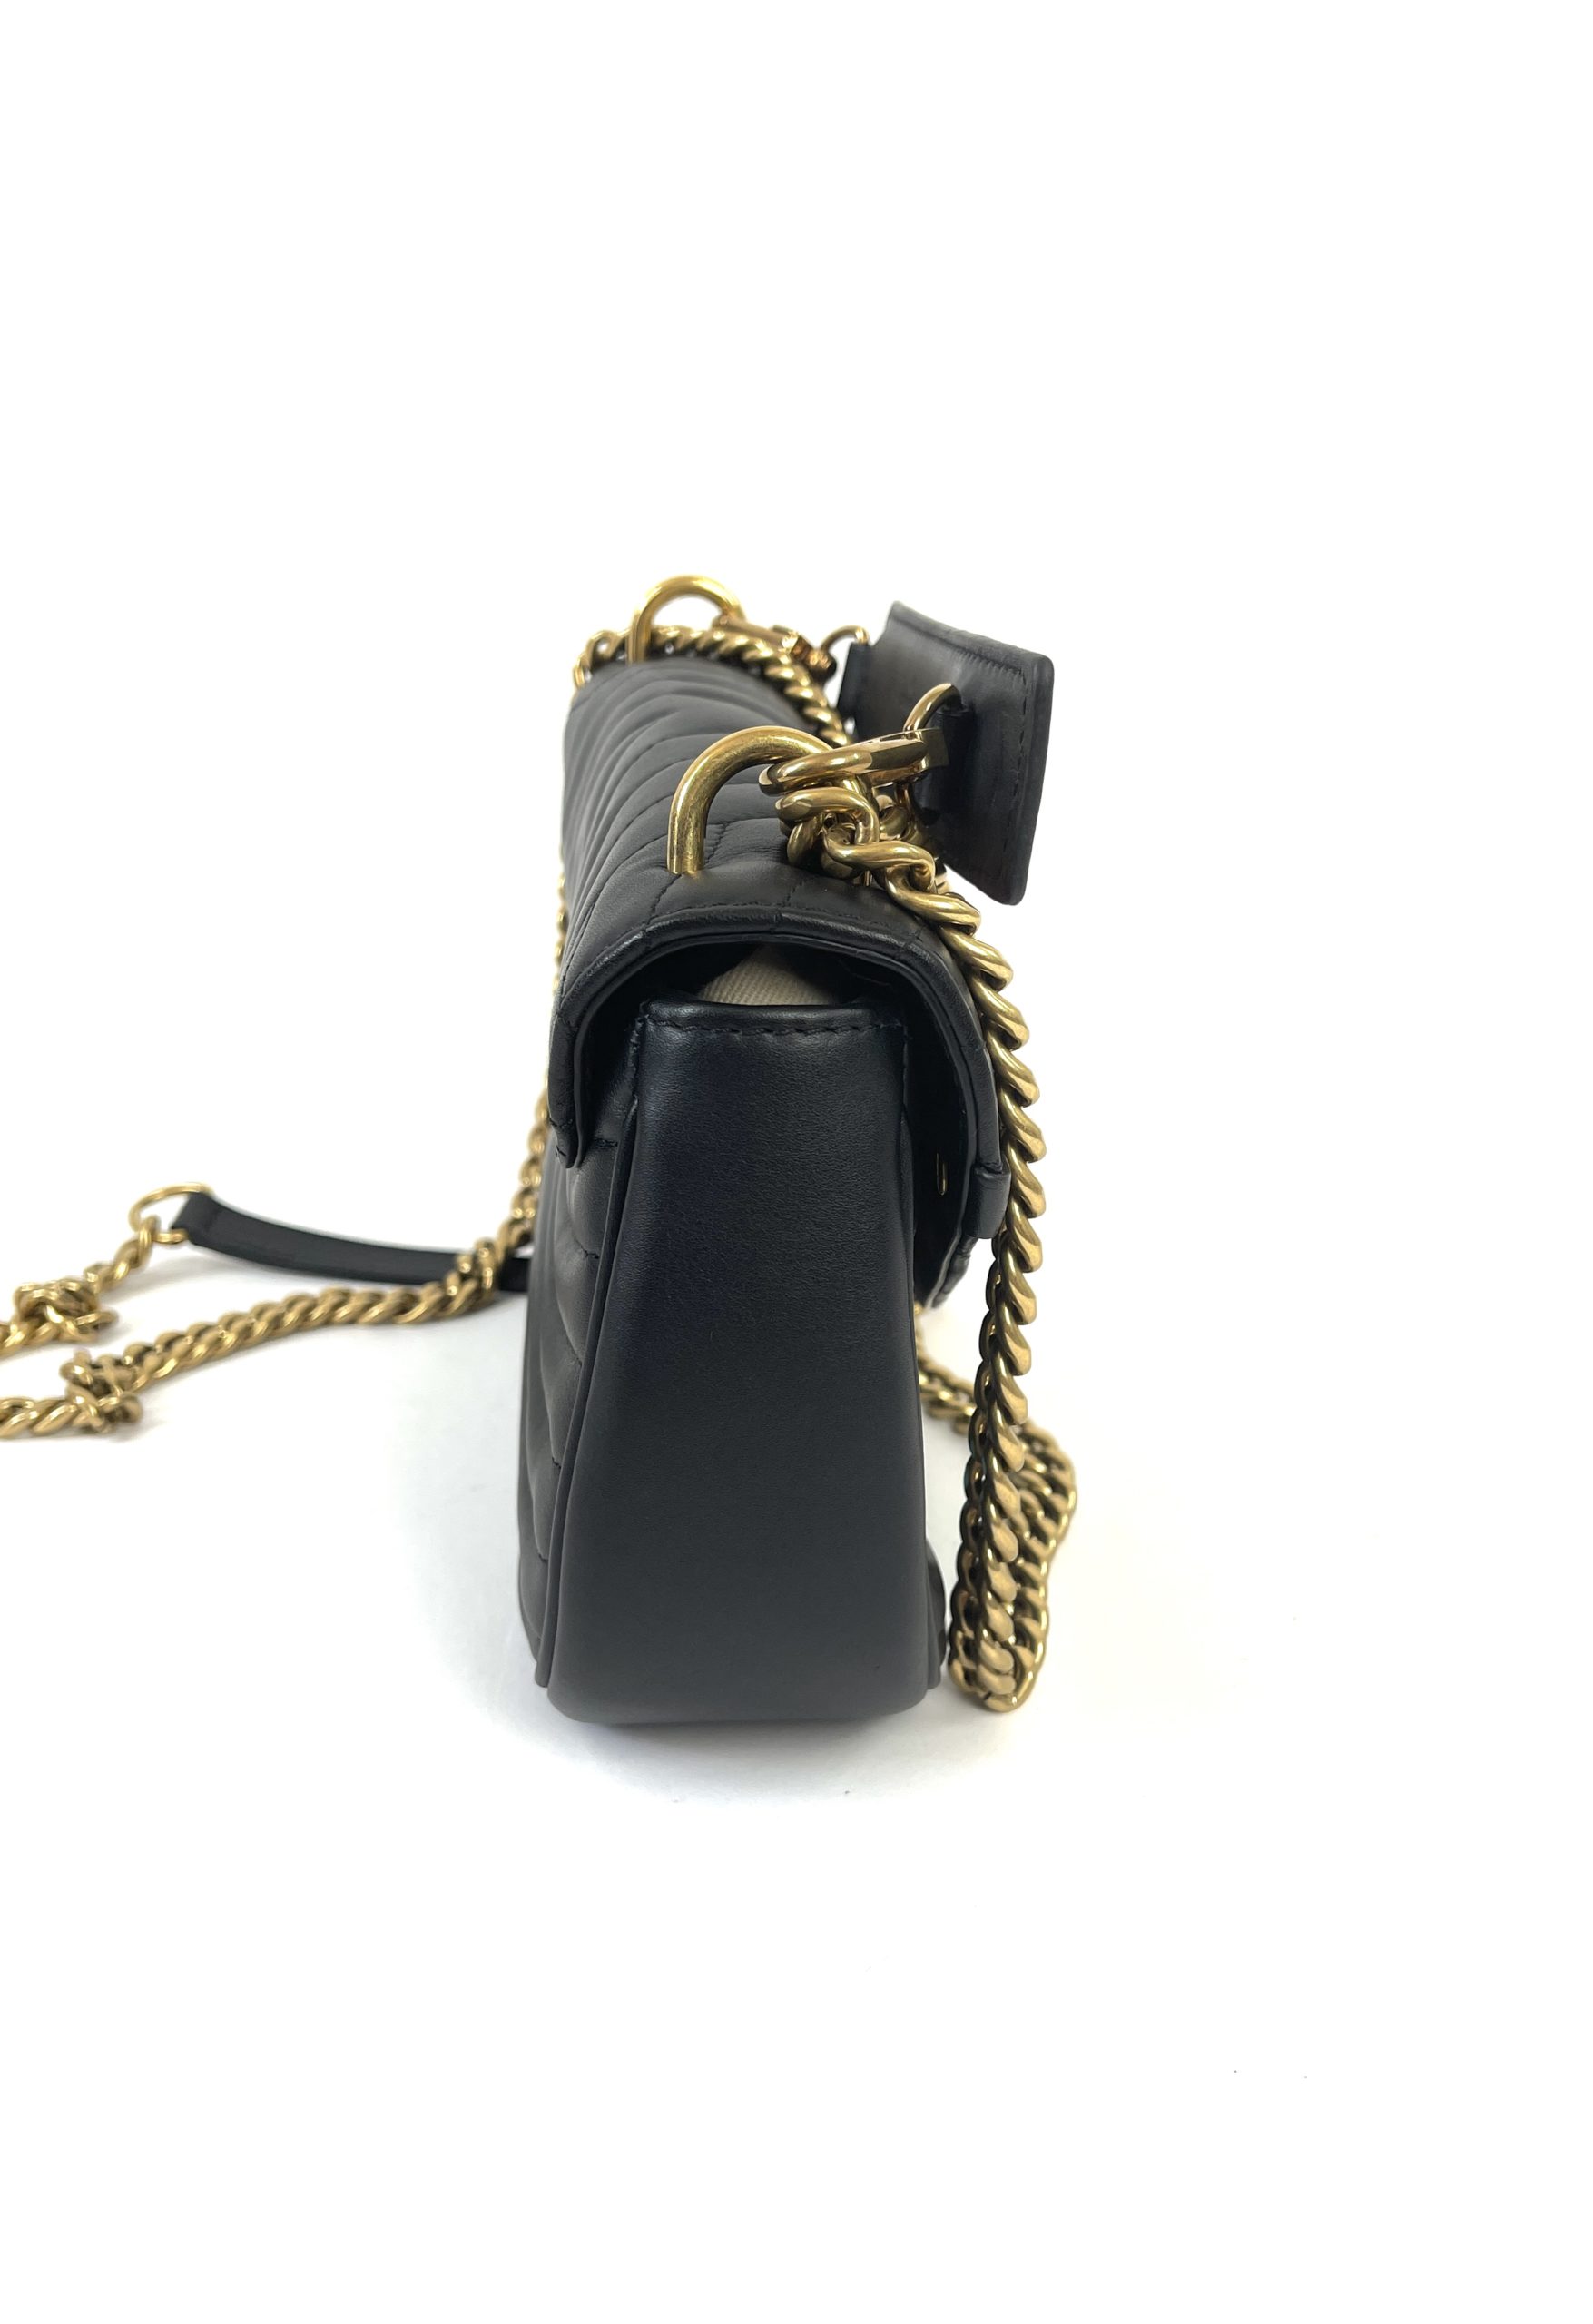 lv black bag gold chain